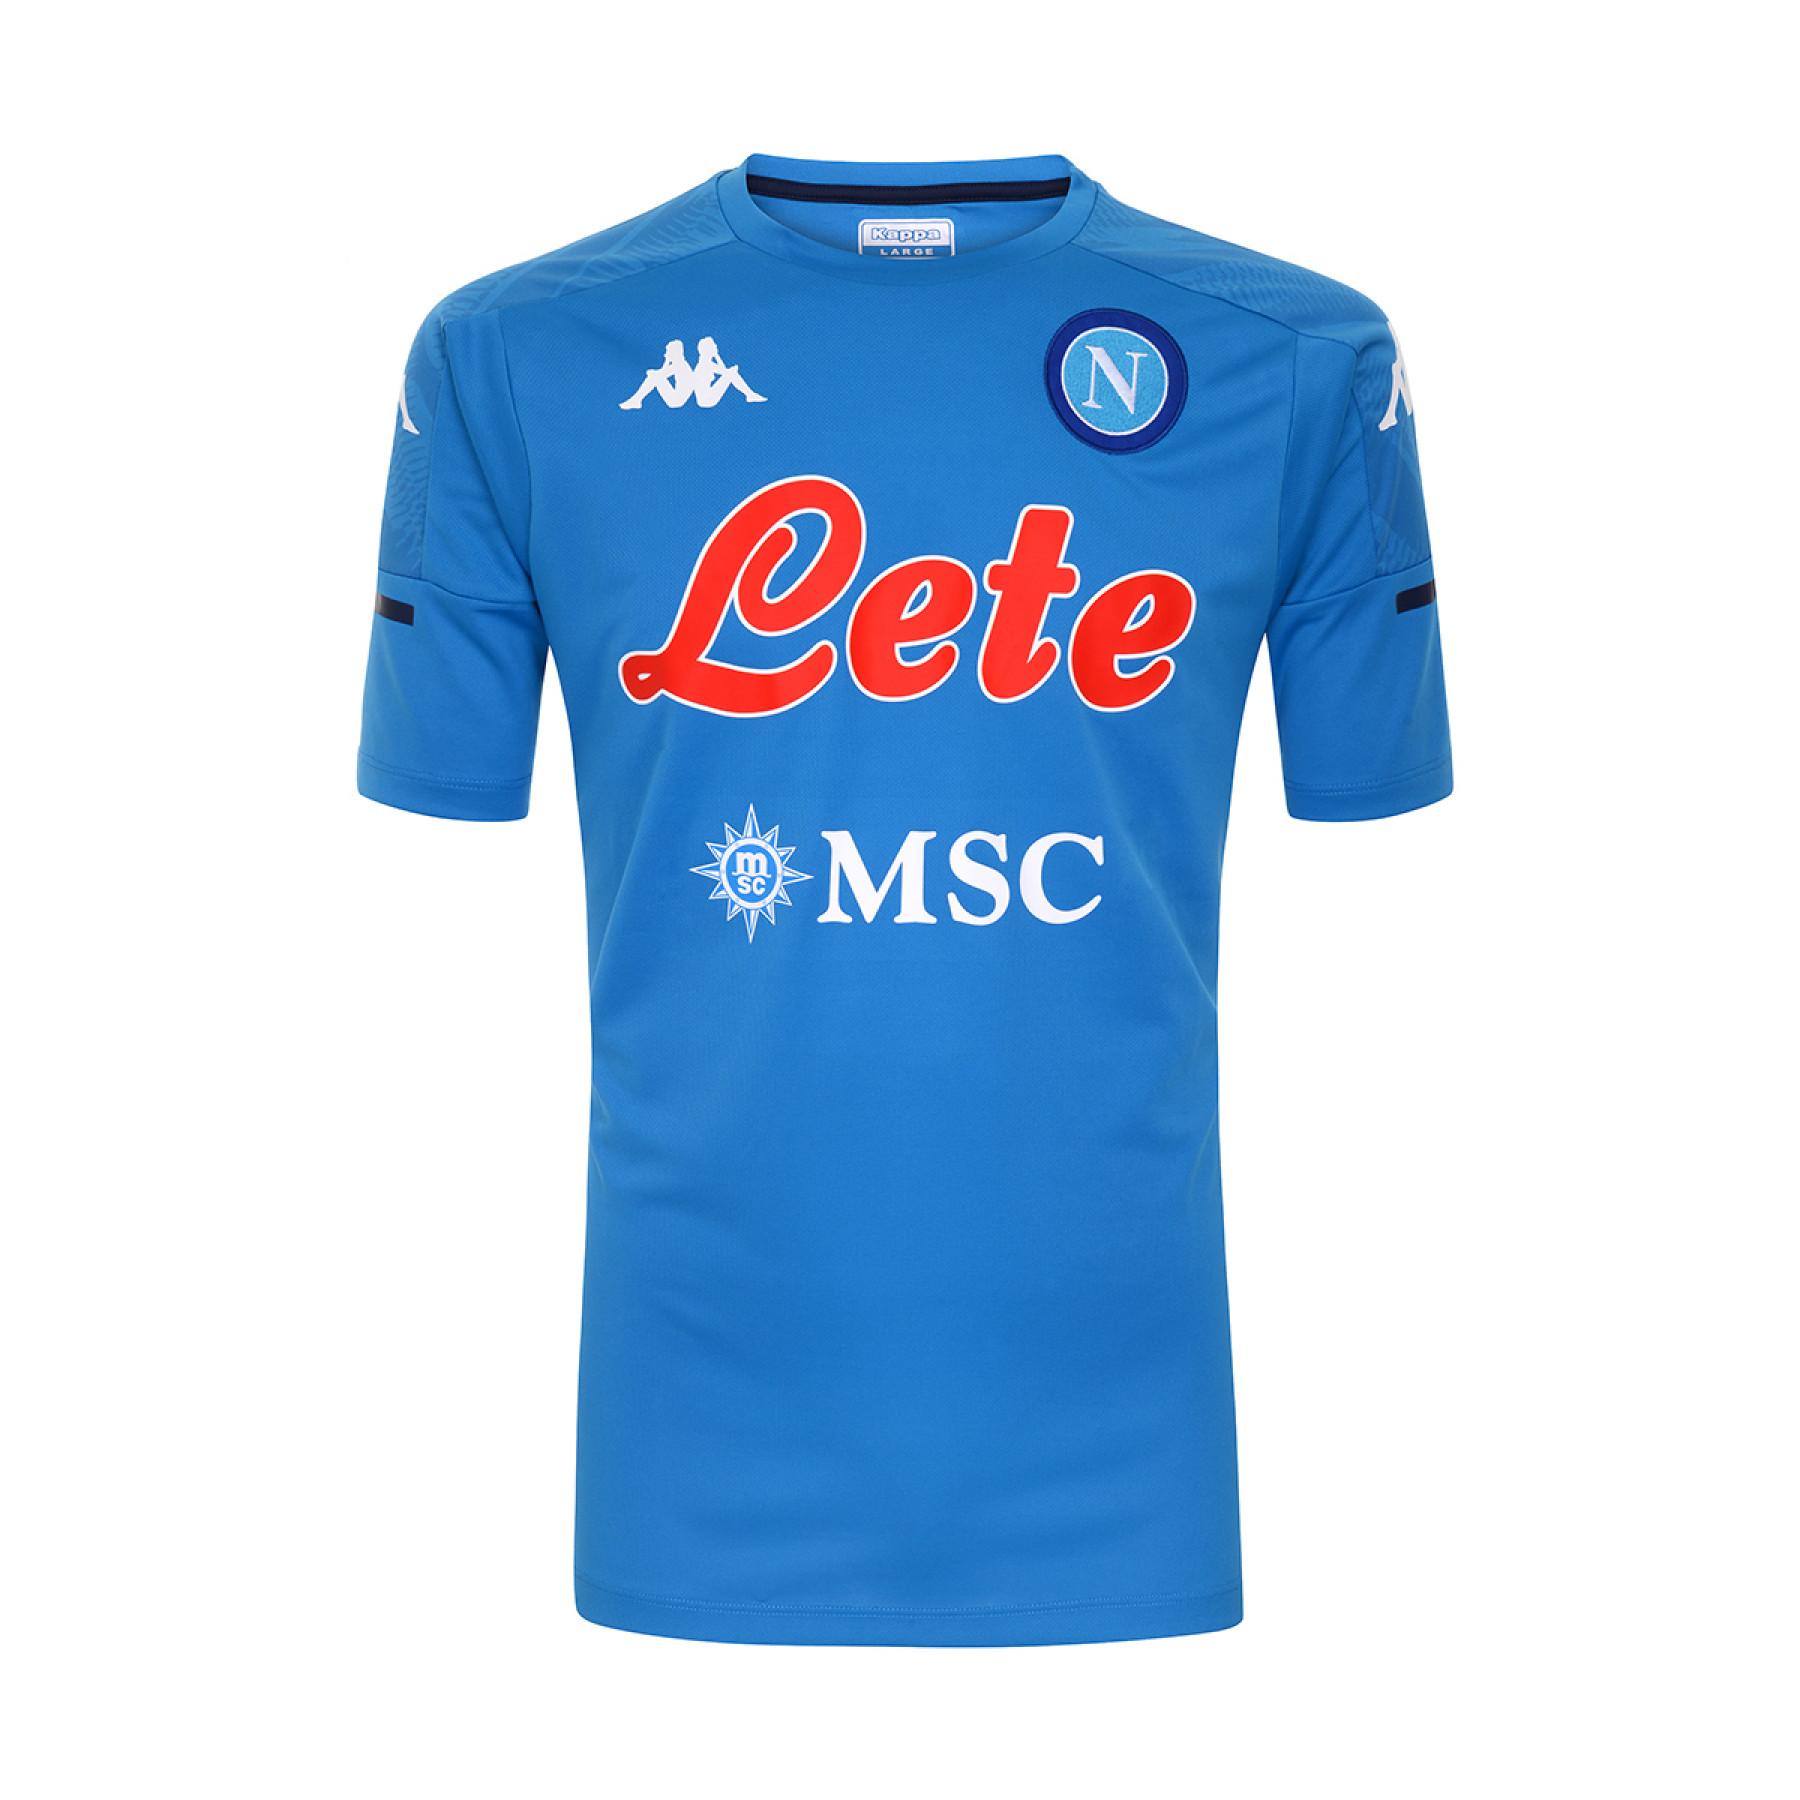 Training shirt SSC Napoli 2020/21 abouo 4